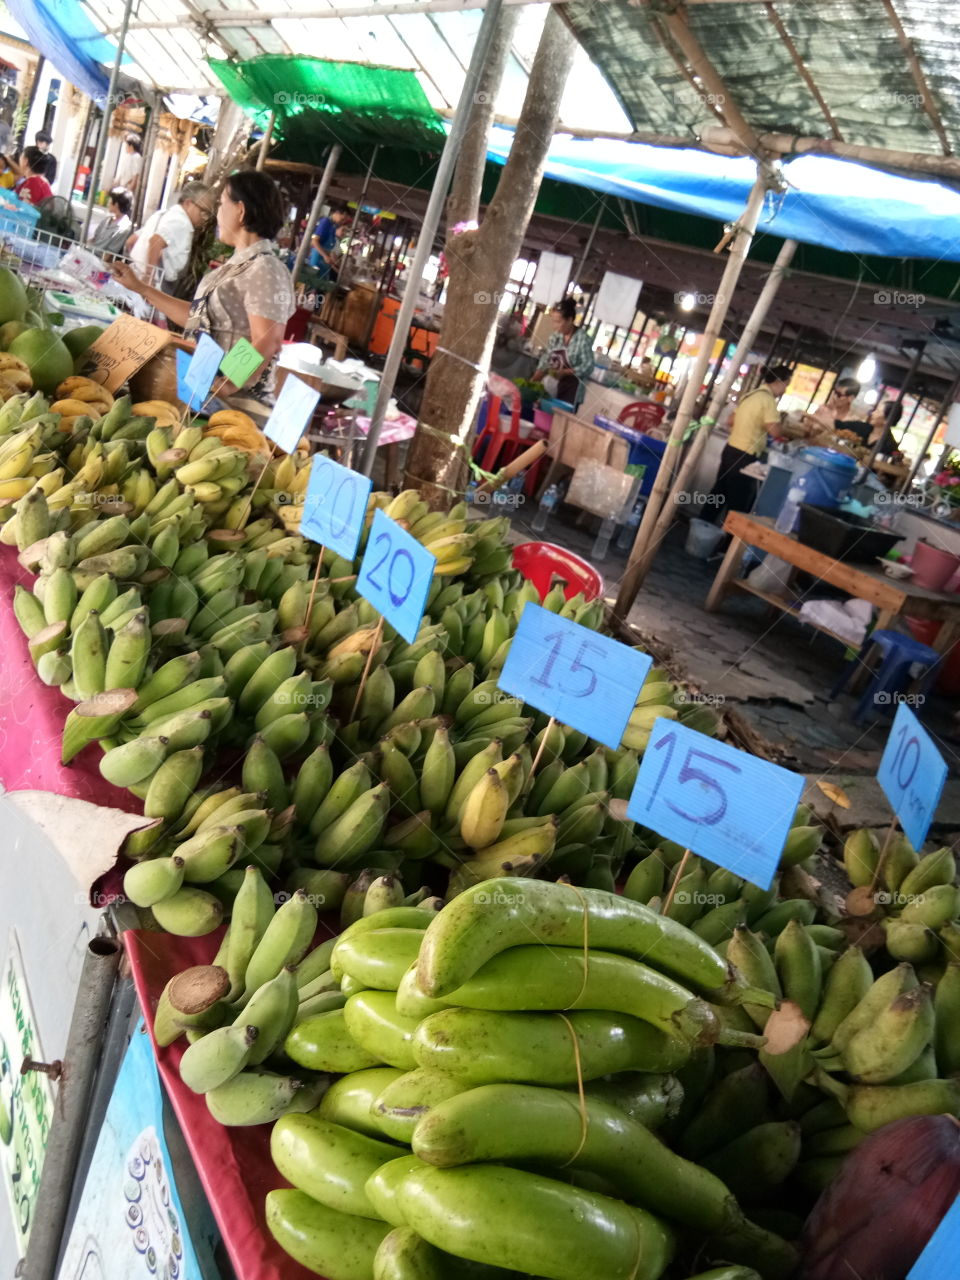 market float
banana
price
green
fresh